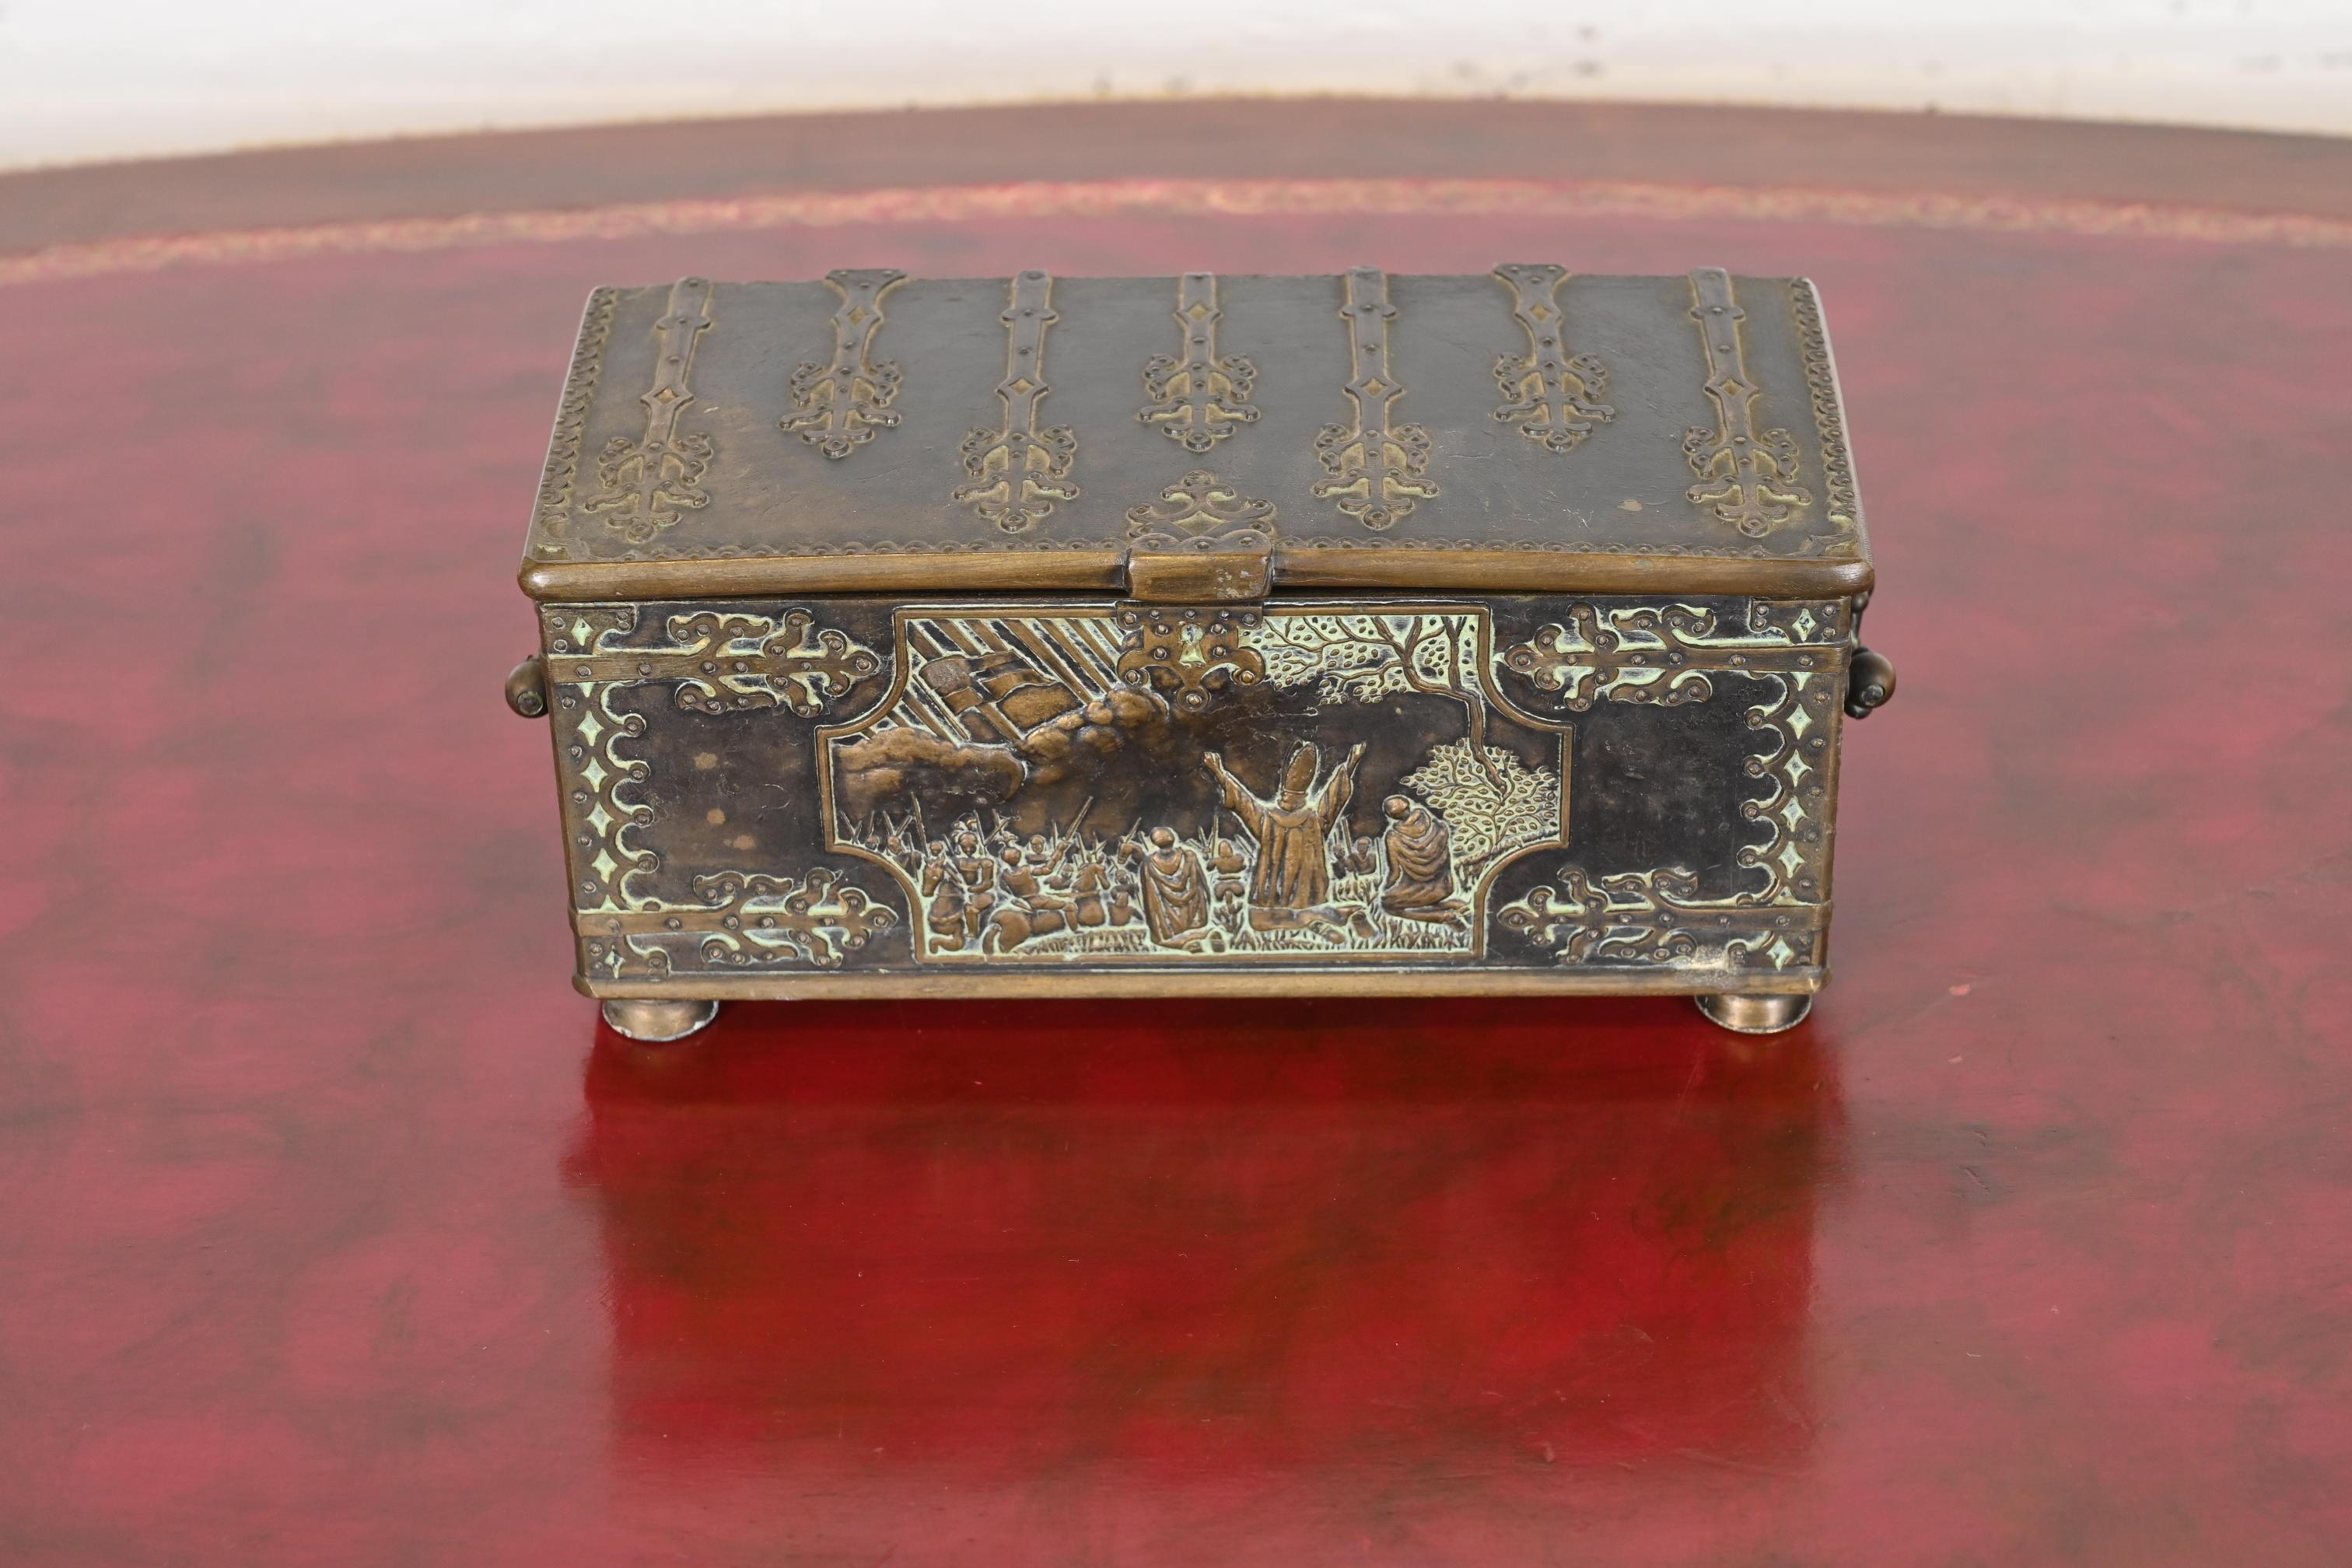 1940s jewelry box